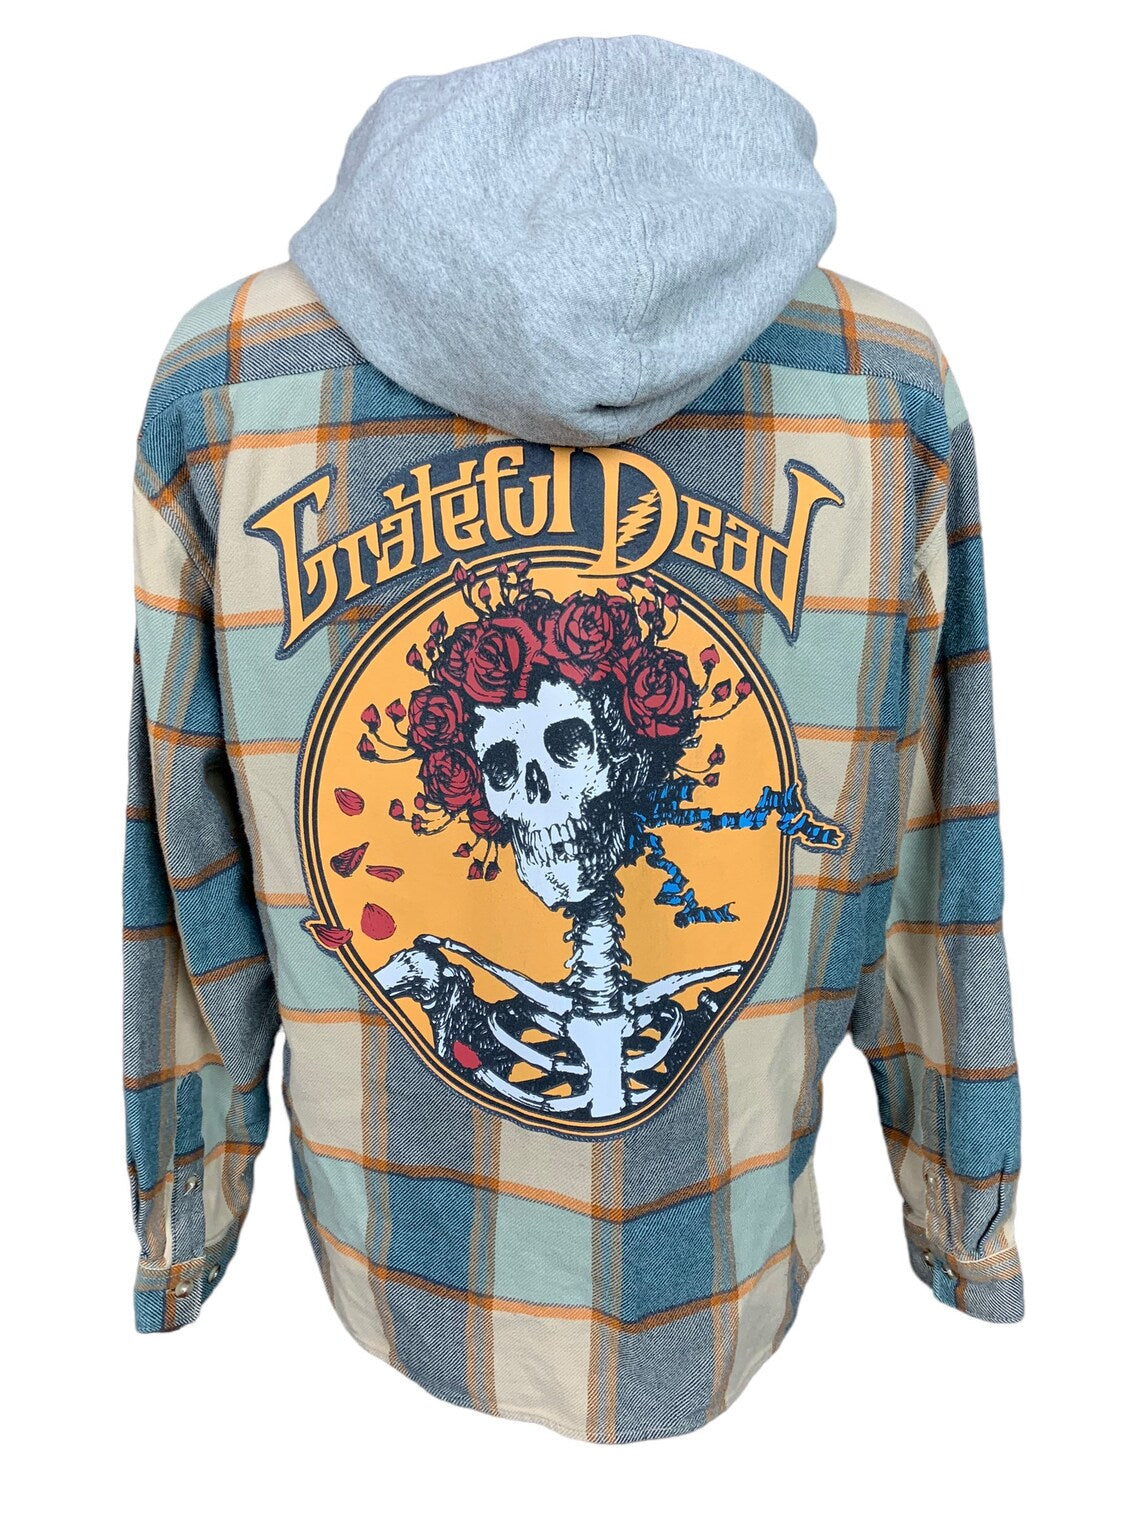 Grateful Dead Hooded Flannel Shirt Custom Work M